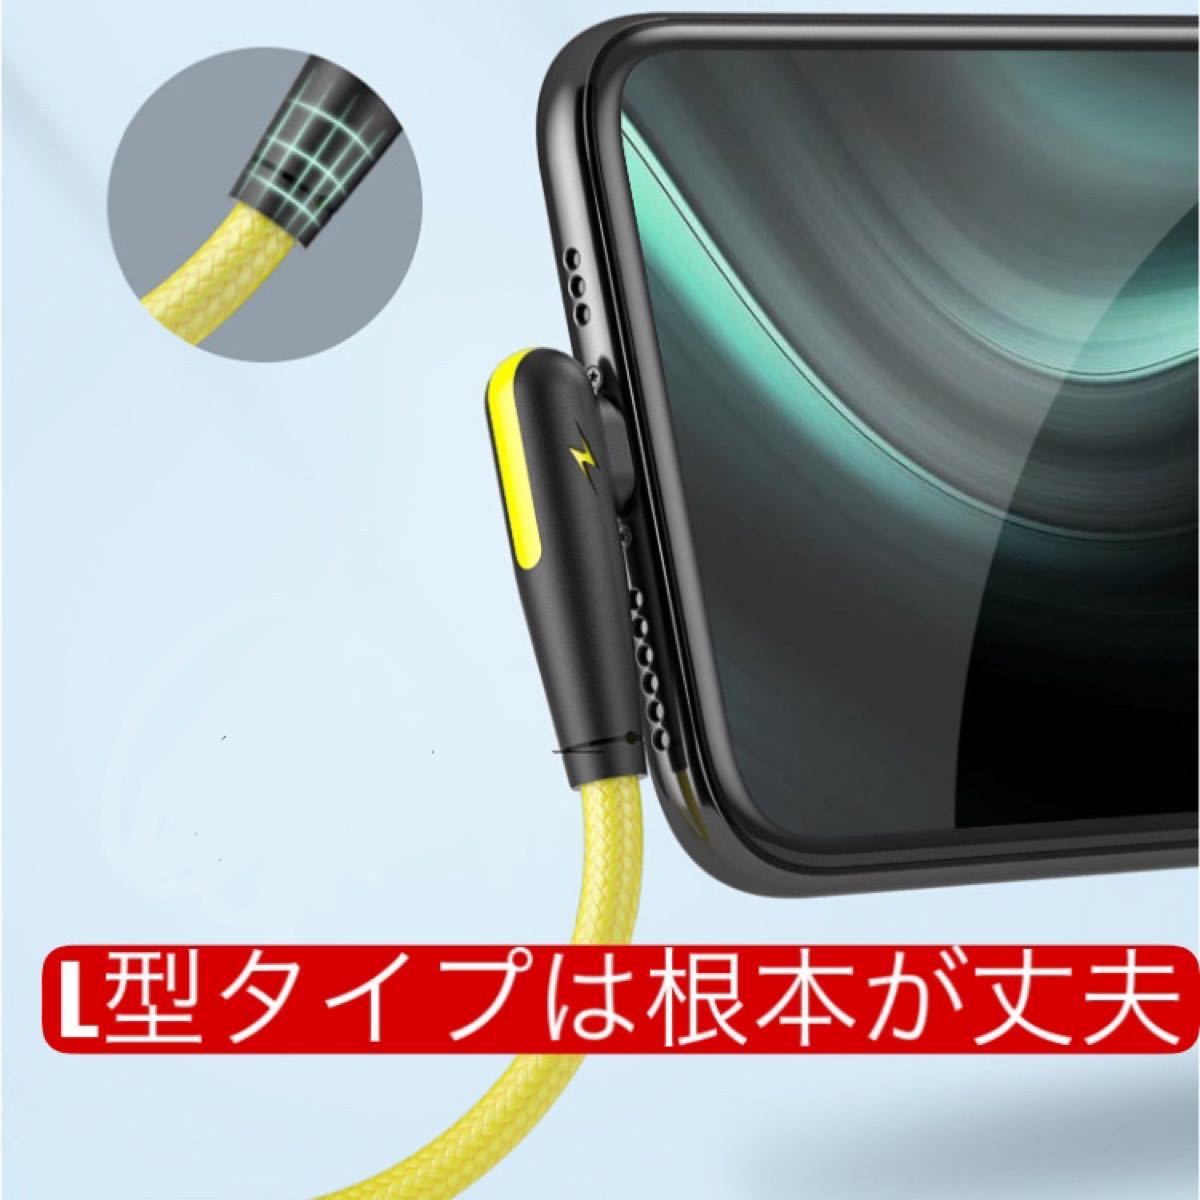 iPhone ライトニング ケーブル L型 2.4A 2m 3色セット